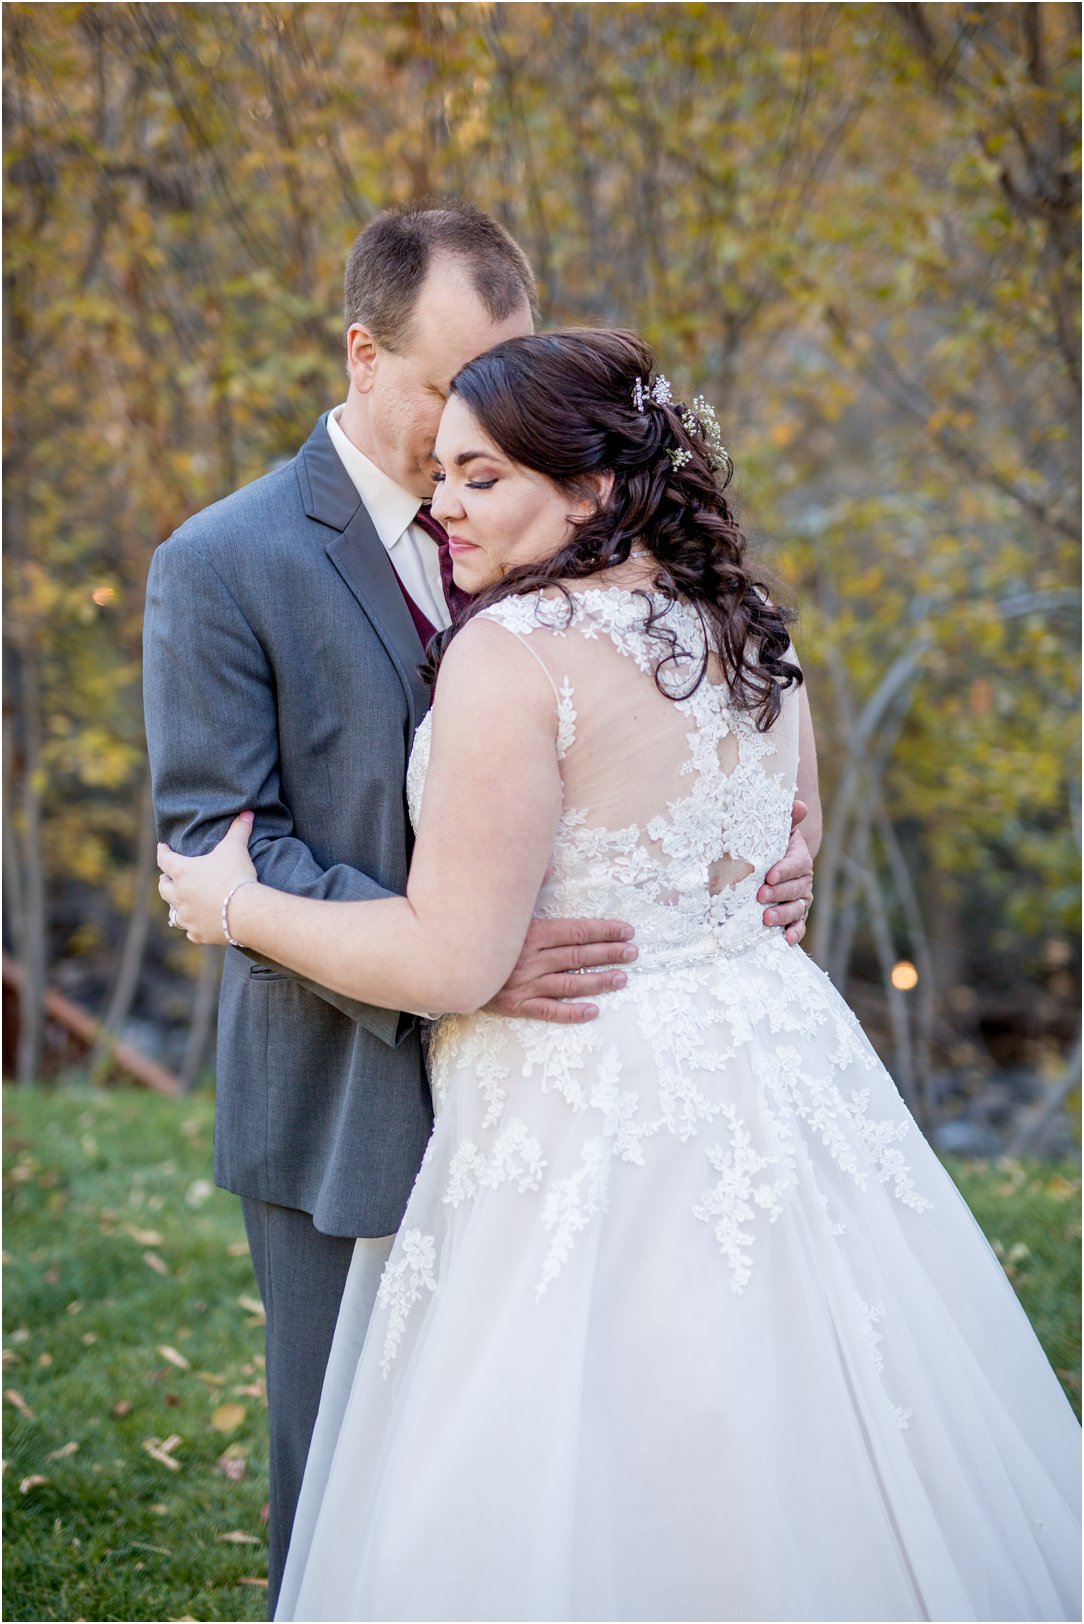 Boulder, Colorado Wedding at Wedgewood Boulder Creek by Greeley, Colorado Wedding Photographer